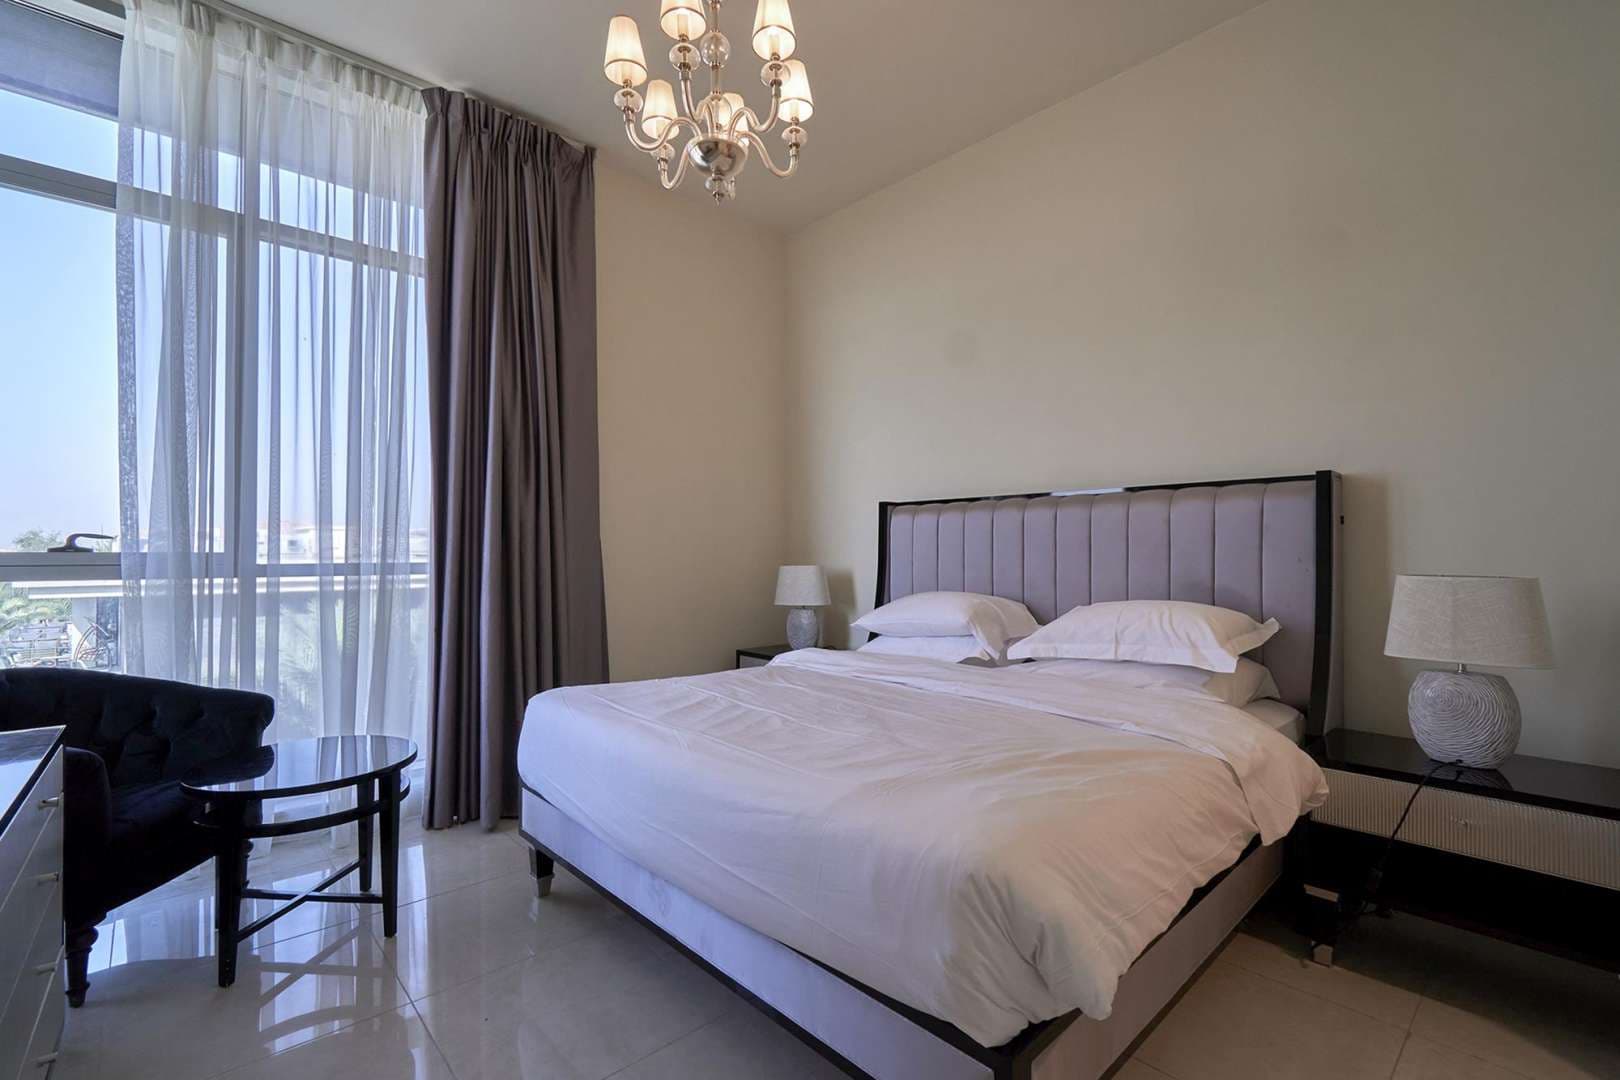 2 Bedroom Apartment For Rent The Polo Residence Lp06547 29de066d6005d200.jpg